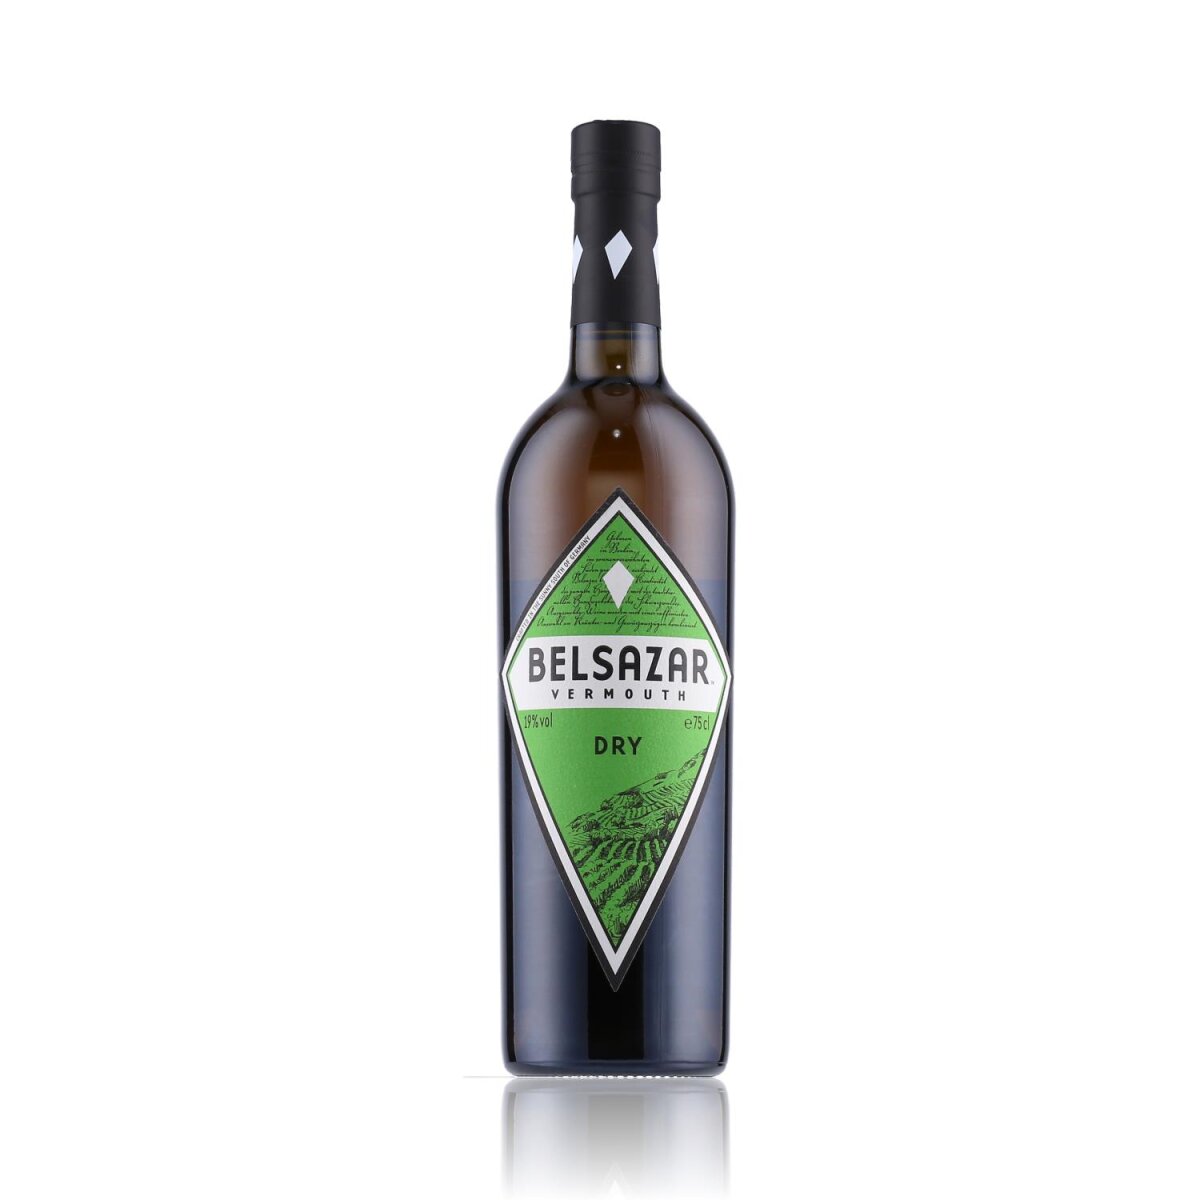 Belsazar Dry Vermouth 19% Vol. 0,75l, 16,89 €